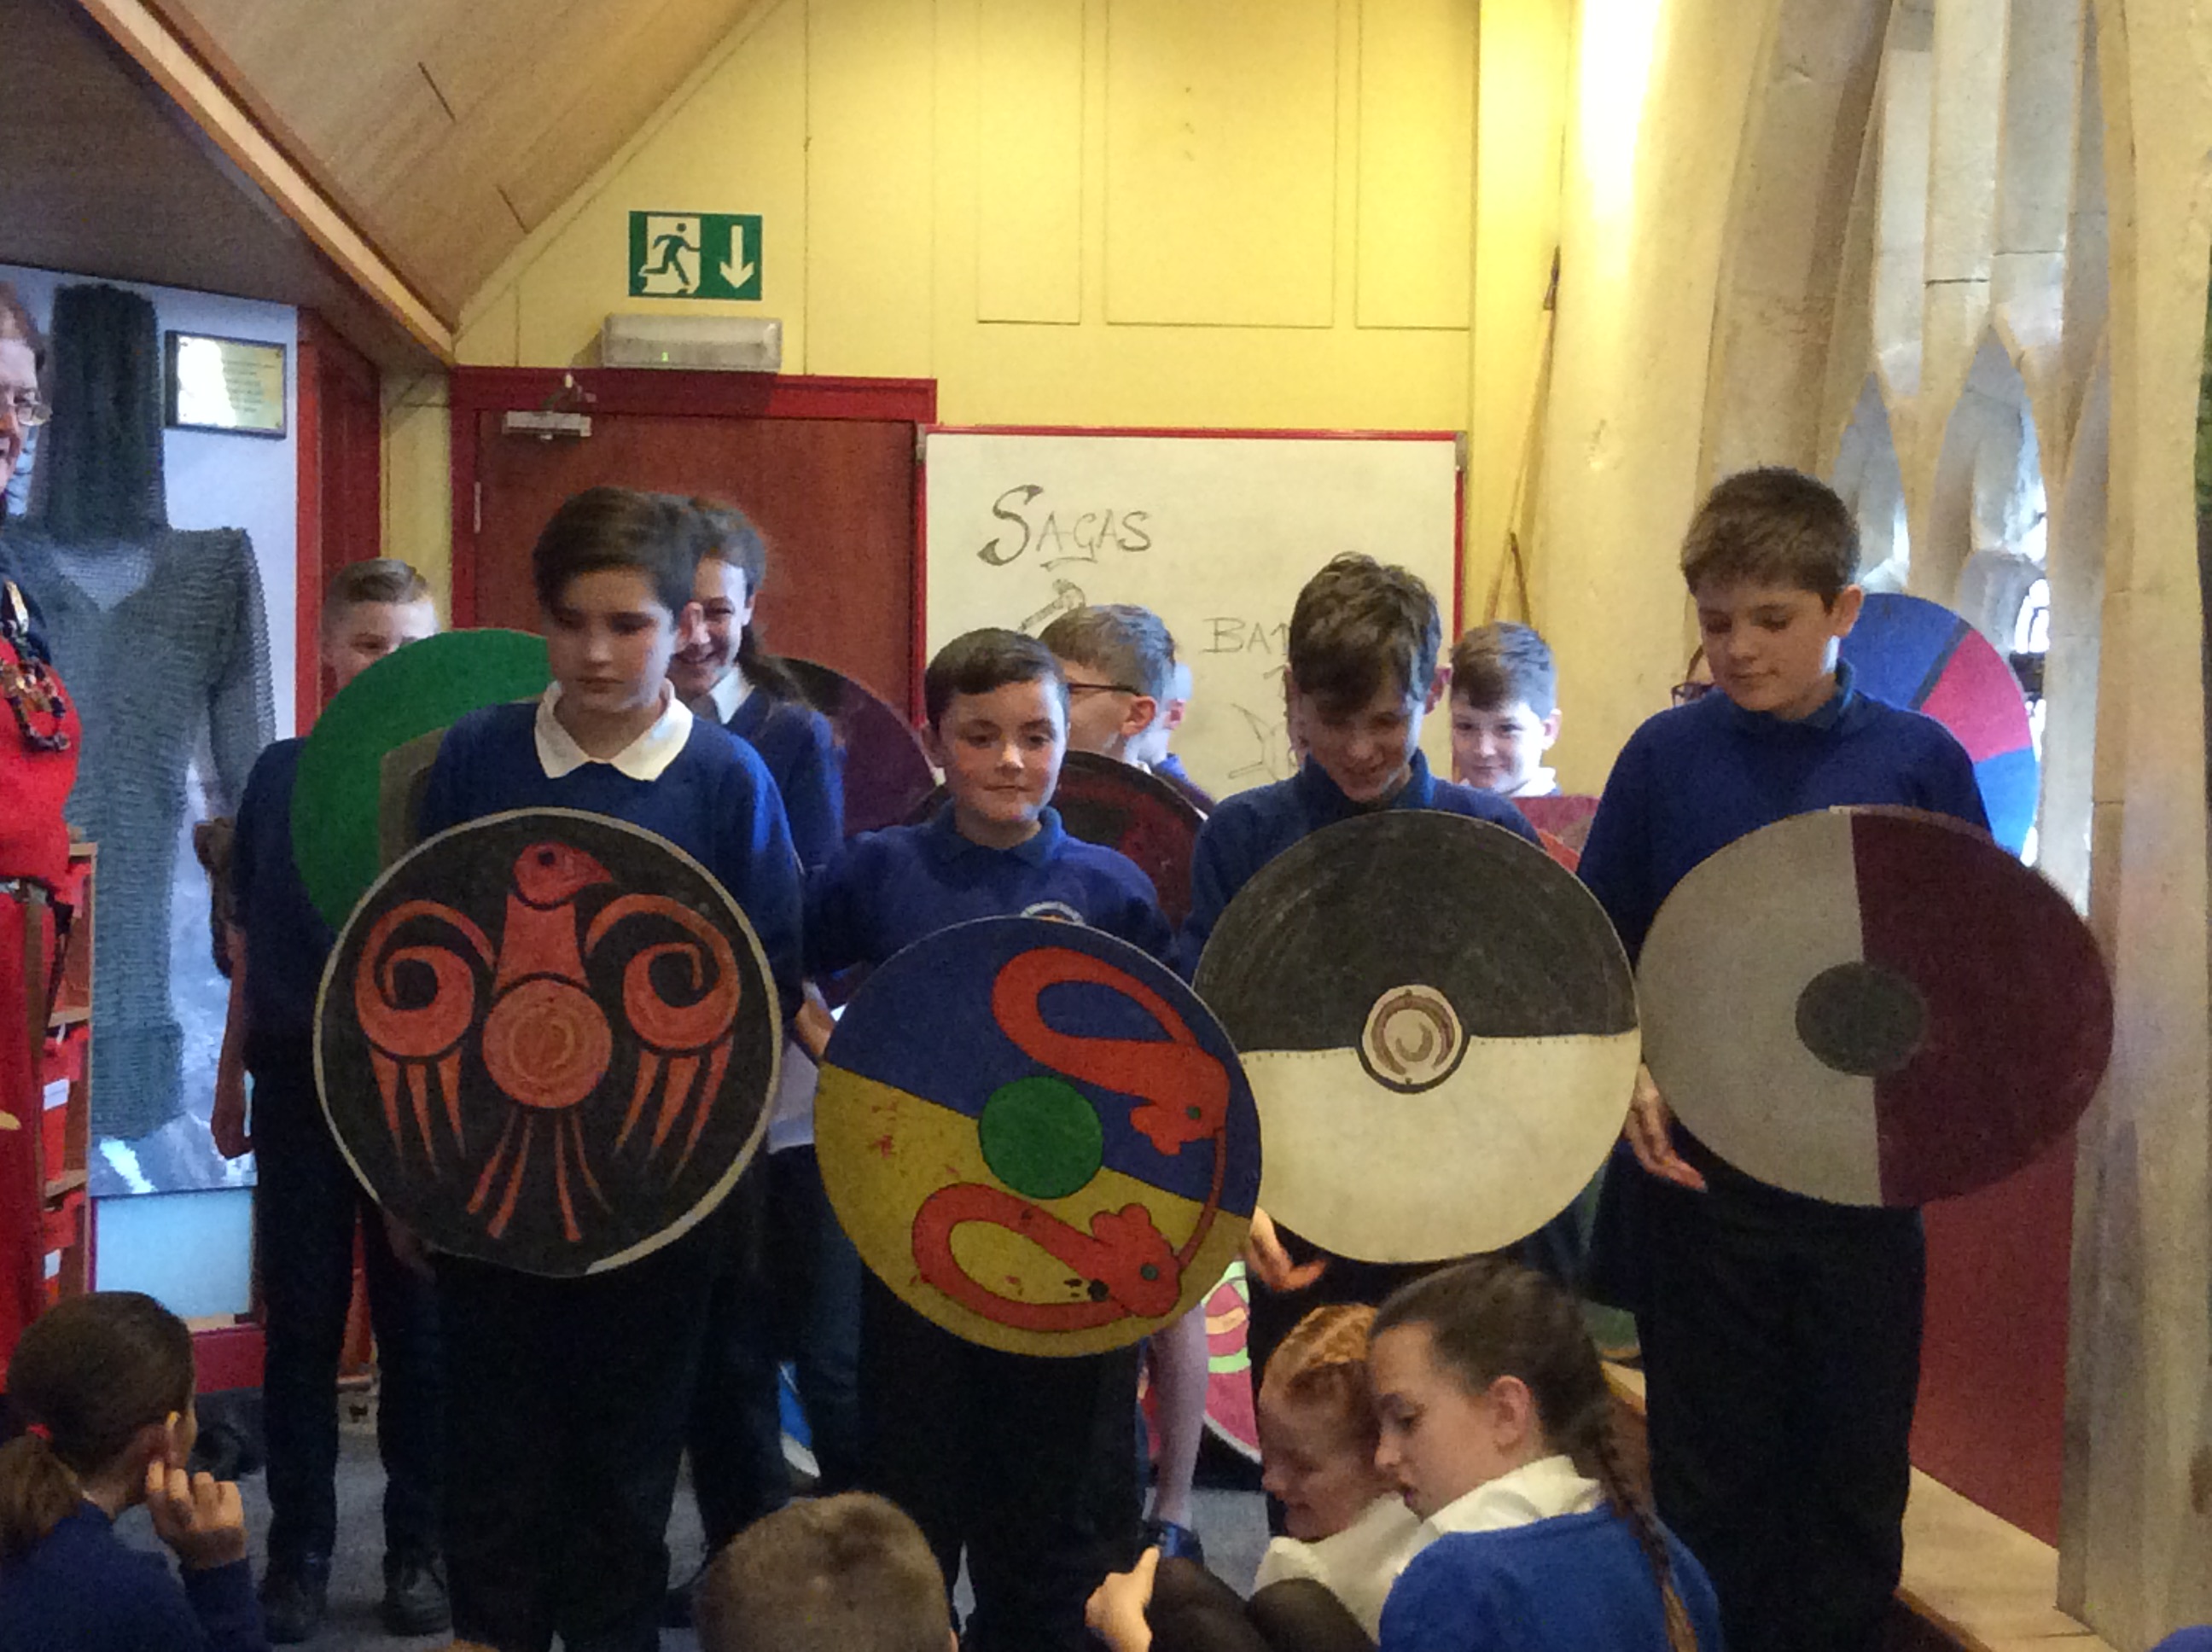 Children holding Viking shields